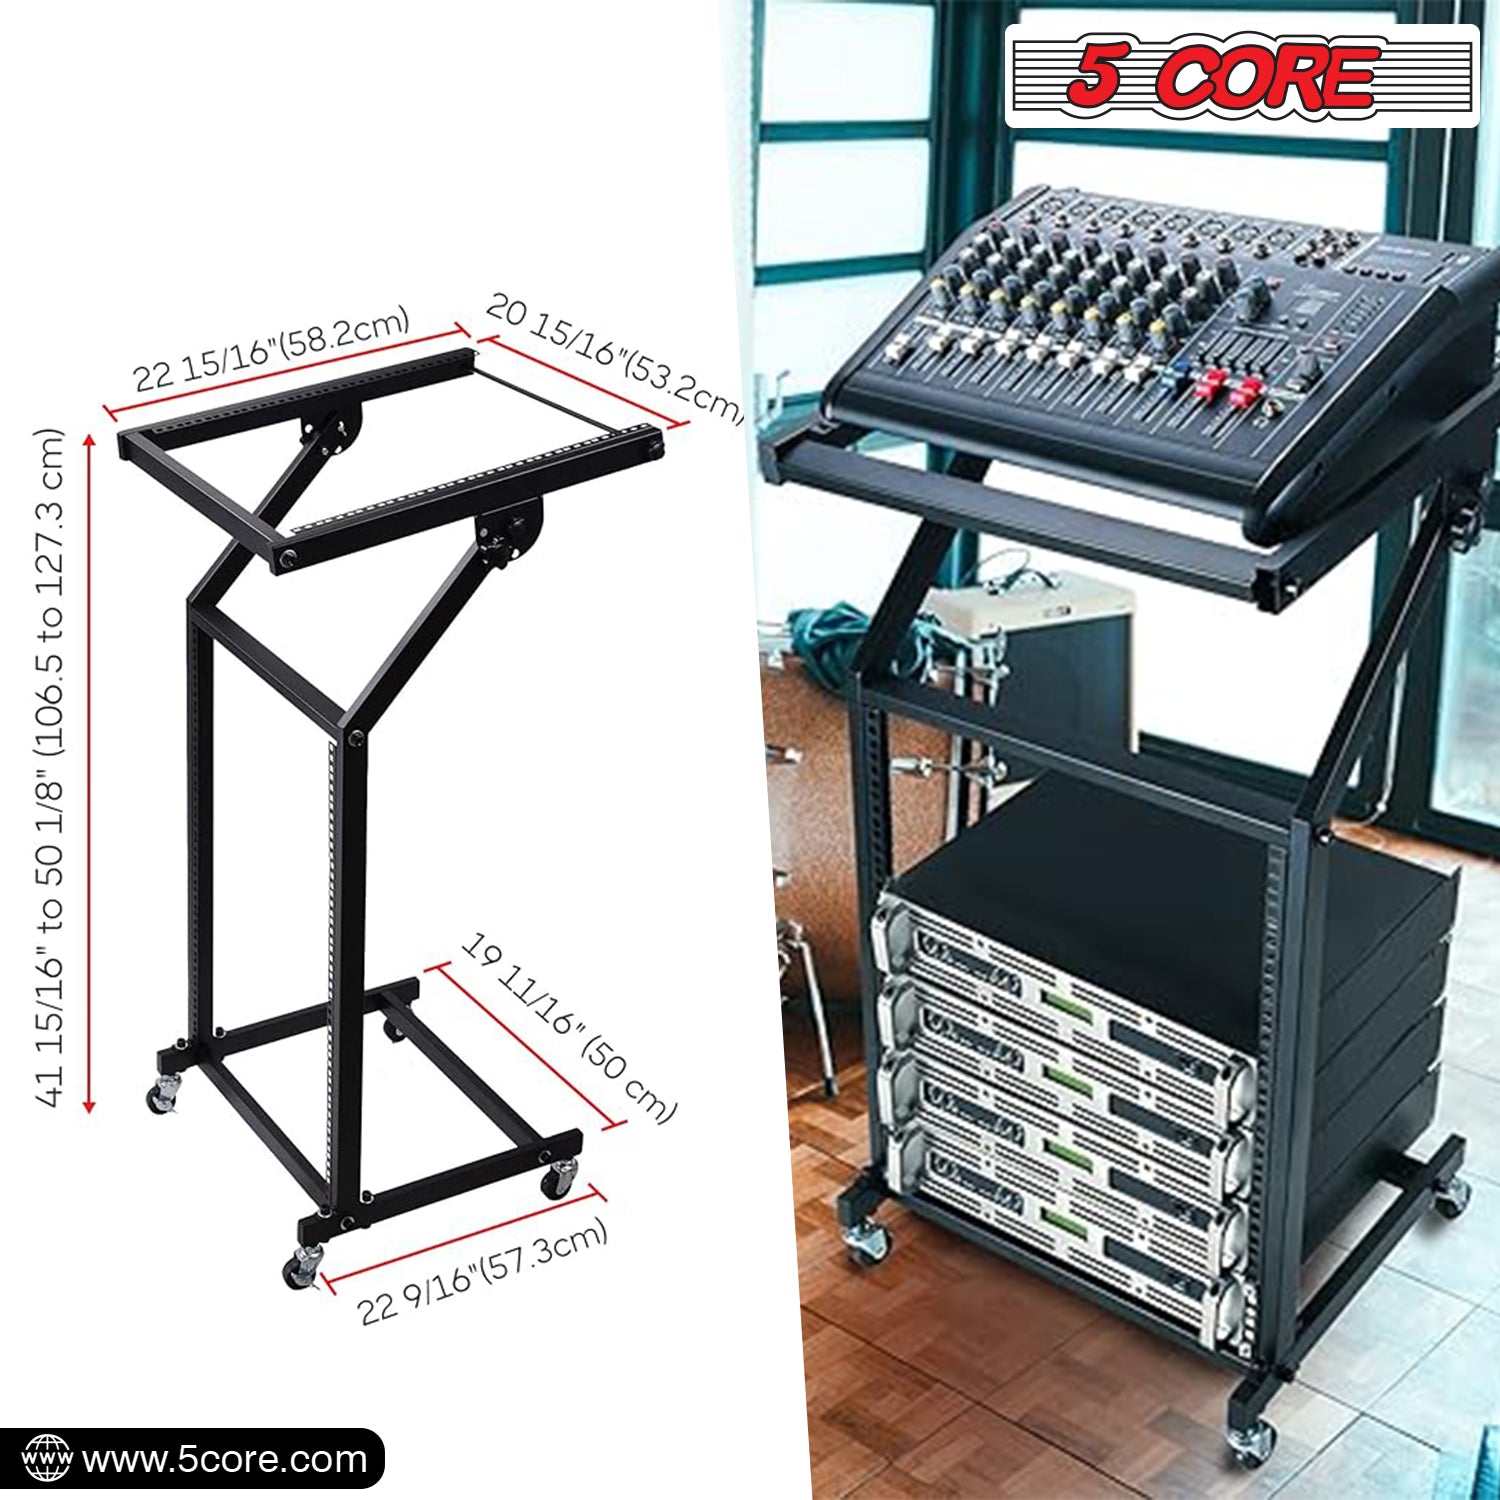 5Core 12U DJ Mixer Audio Rack Stand Adjustable Mount Professional Rolling Stage Mixer Table w Wheel